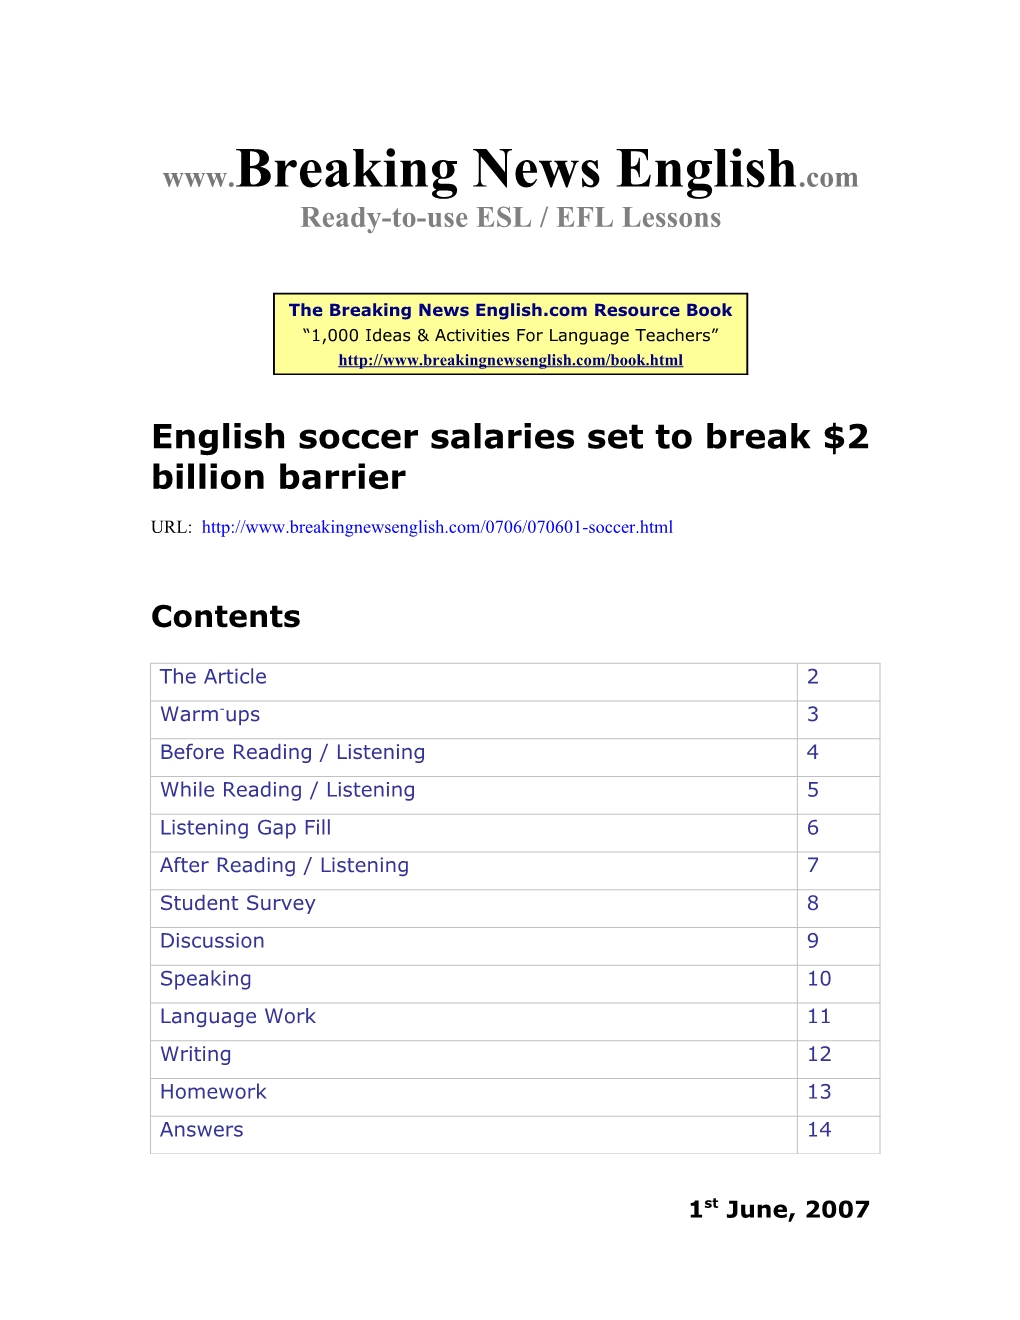 English Soccer Salaries Set to Break $2 Billion Barrier